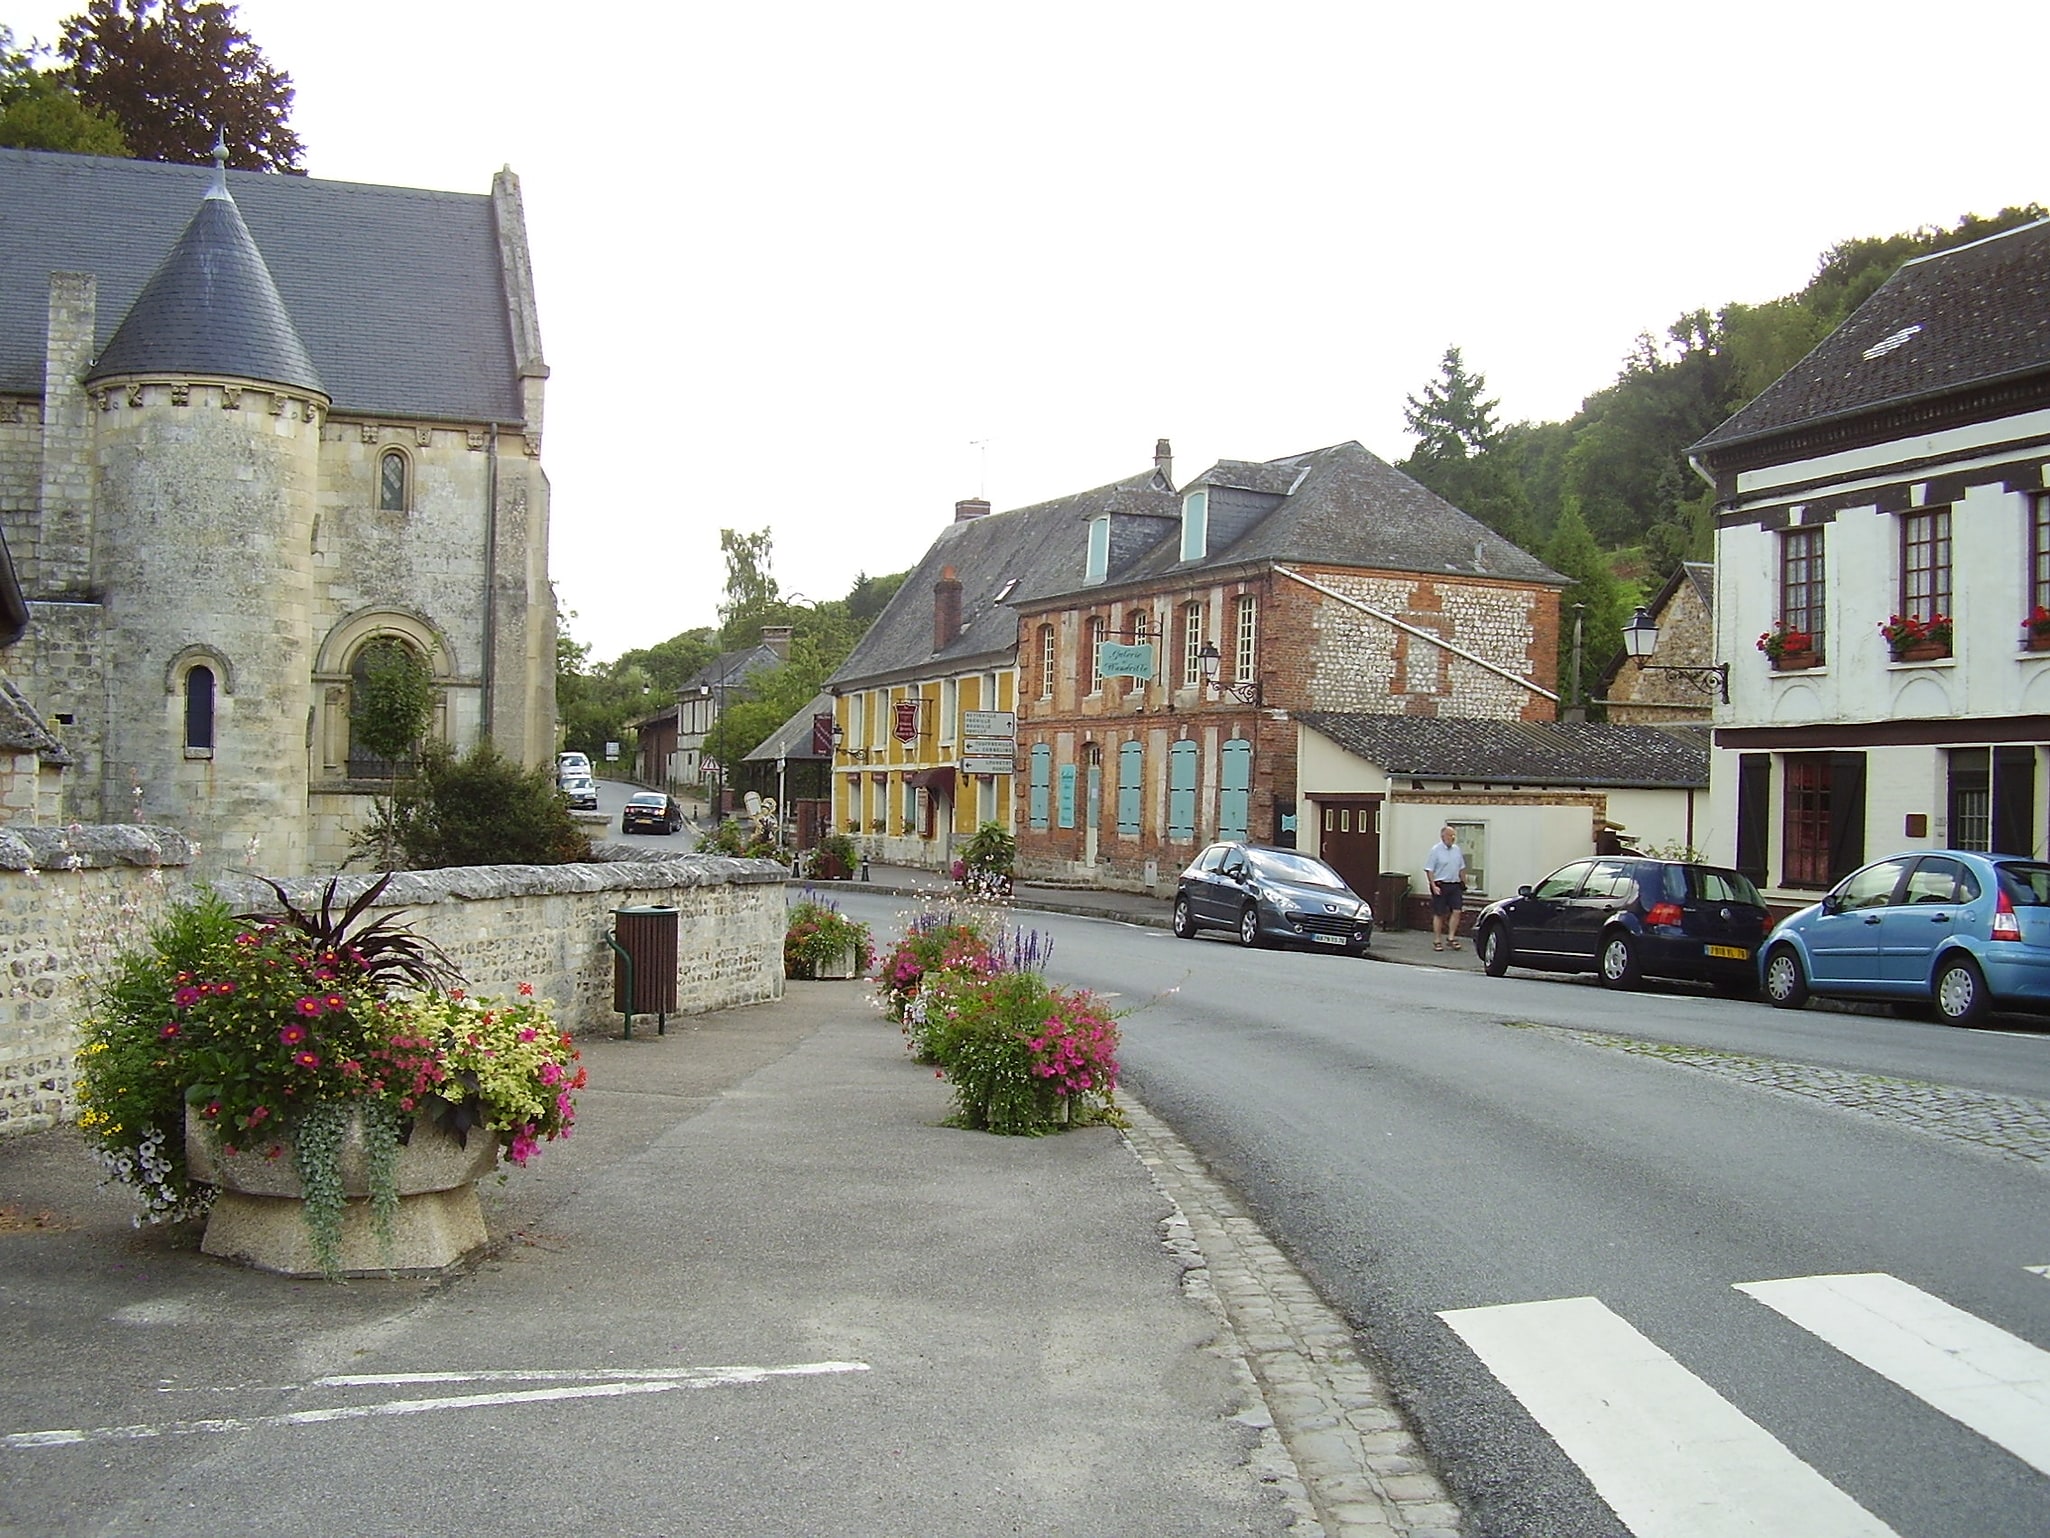 Saint-Wandrille-Rançon, France